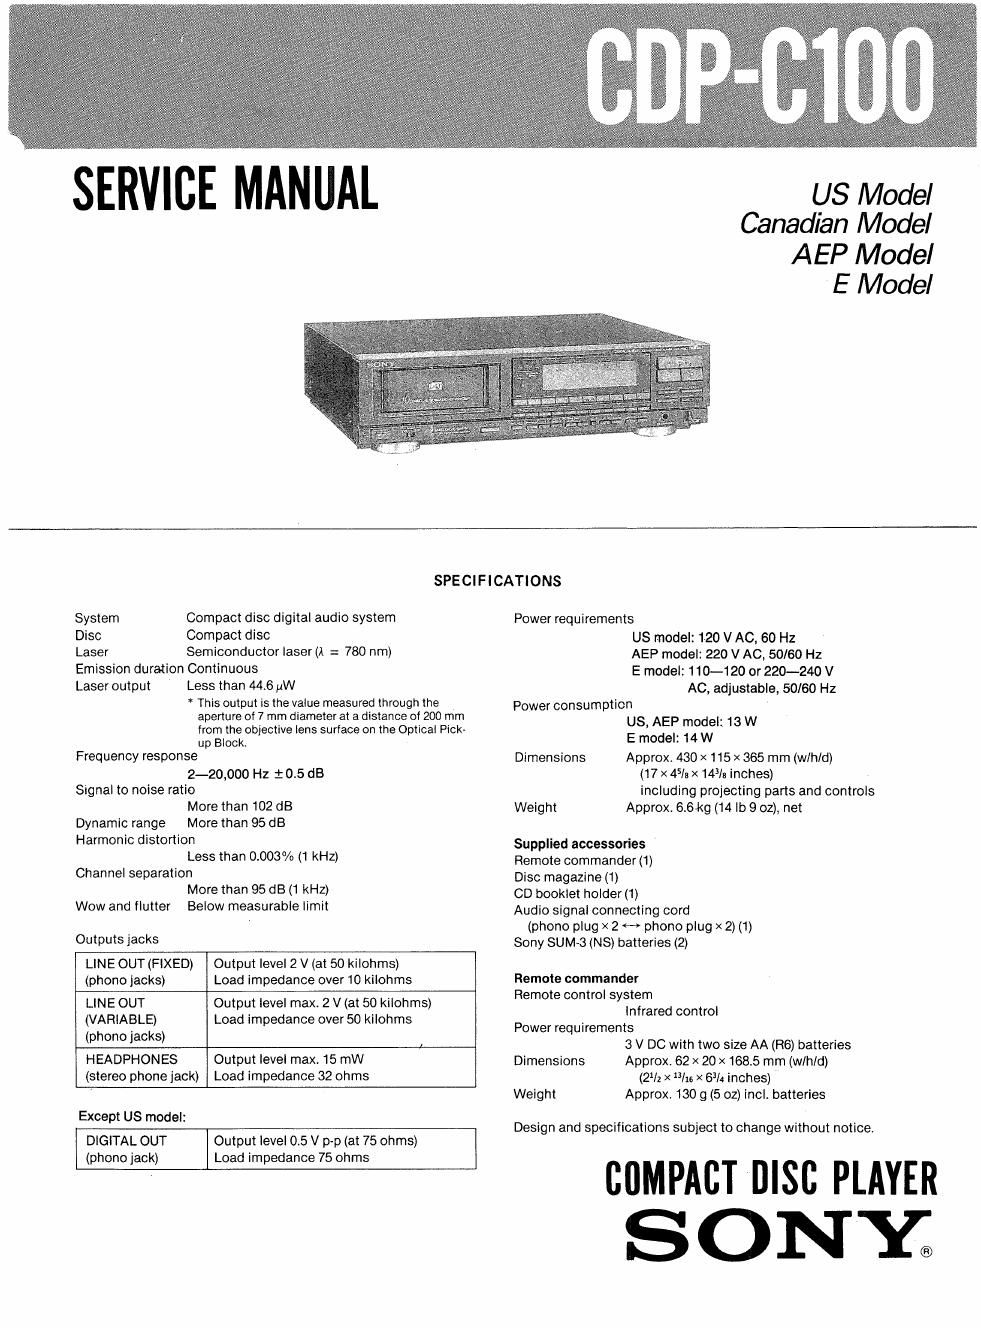 sony cdp c 100 service manual